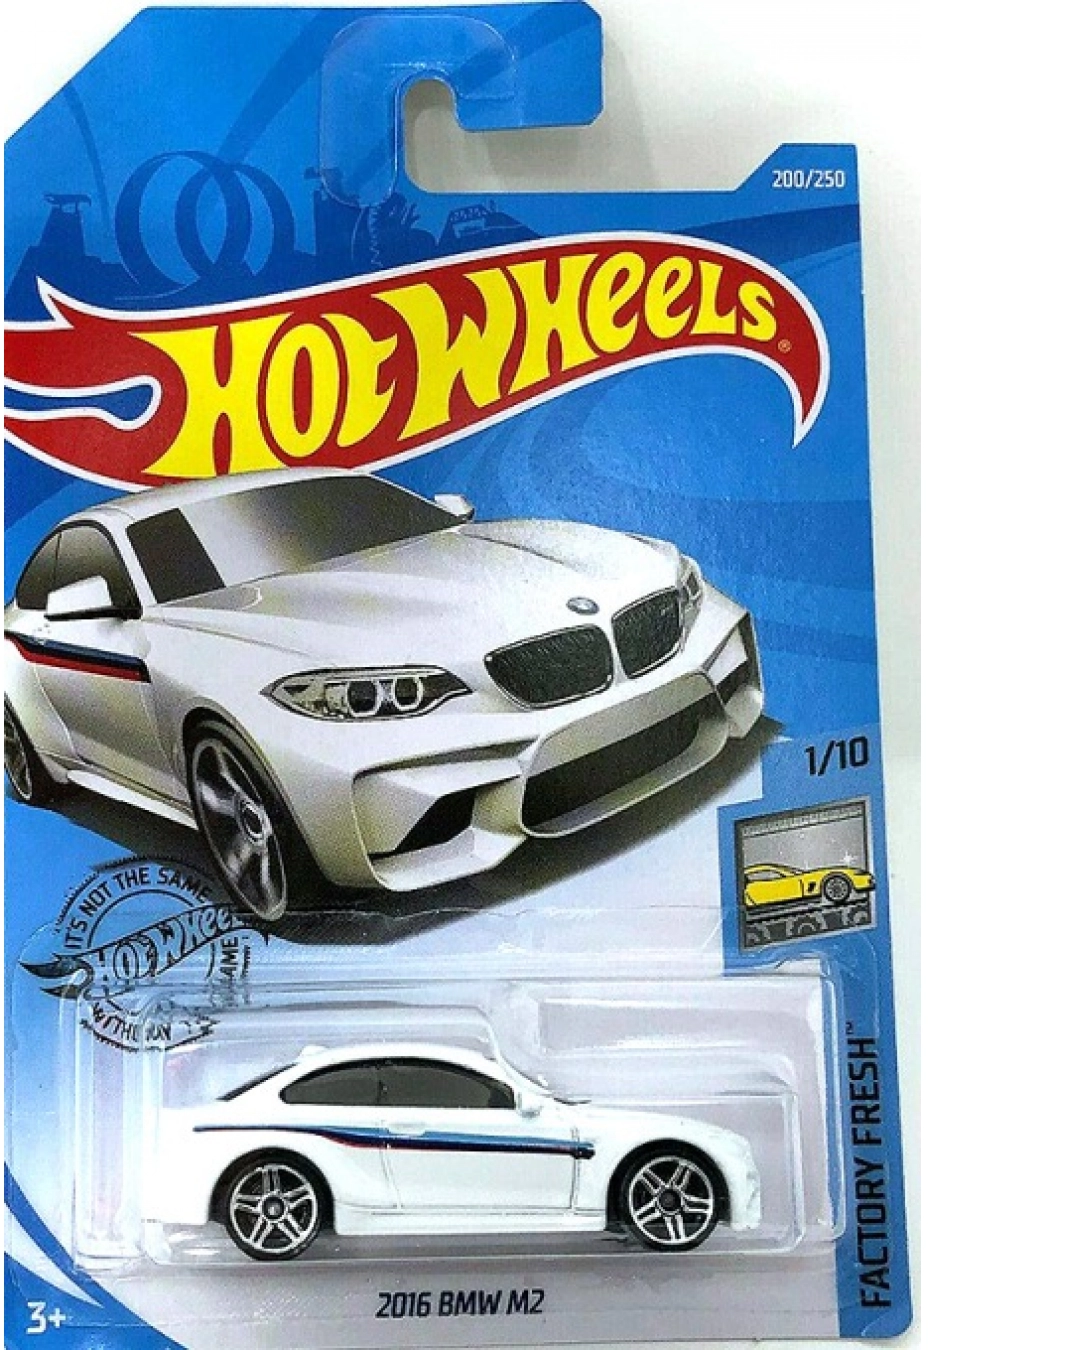 Hot Wheels #200/250 Factory Fresh Serie 1/10 2019-2016 BMW M2 